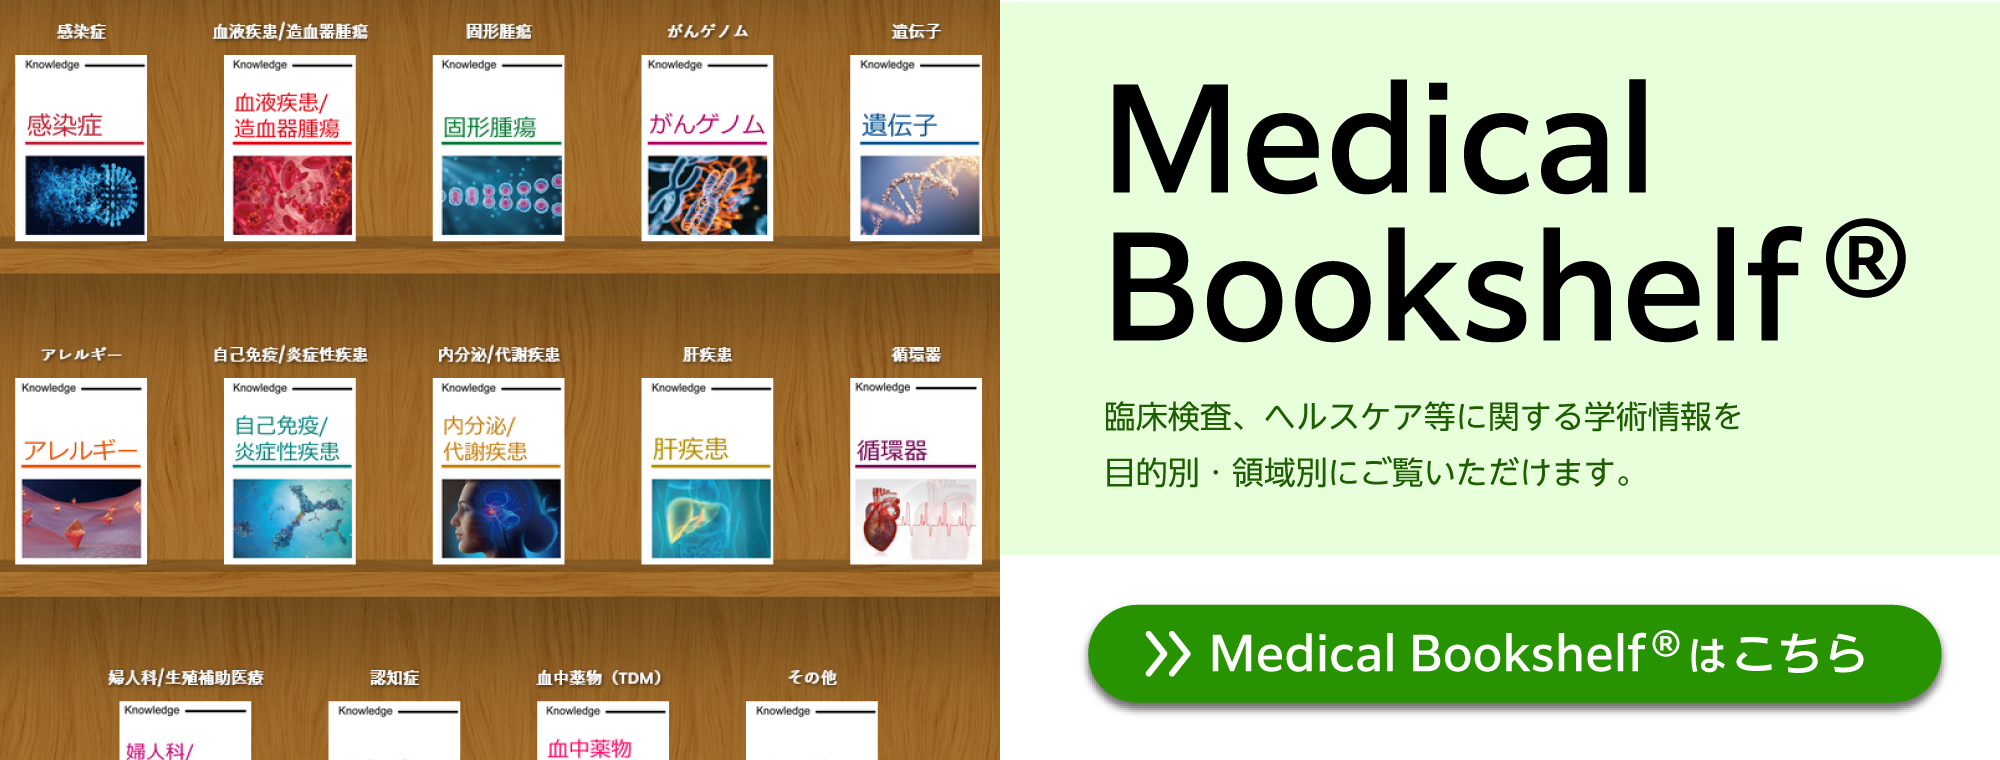 Medical Bookshelf